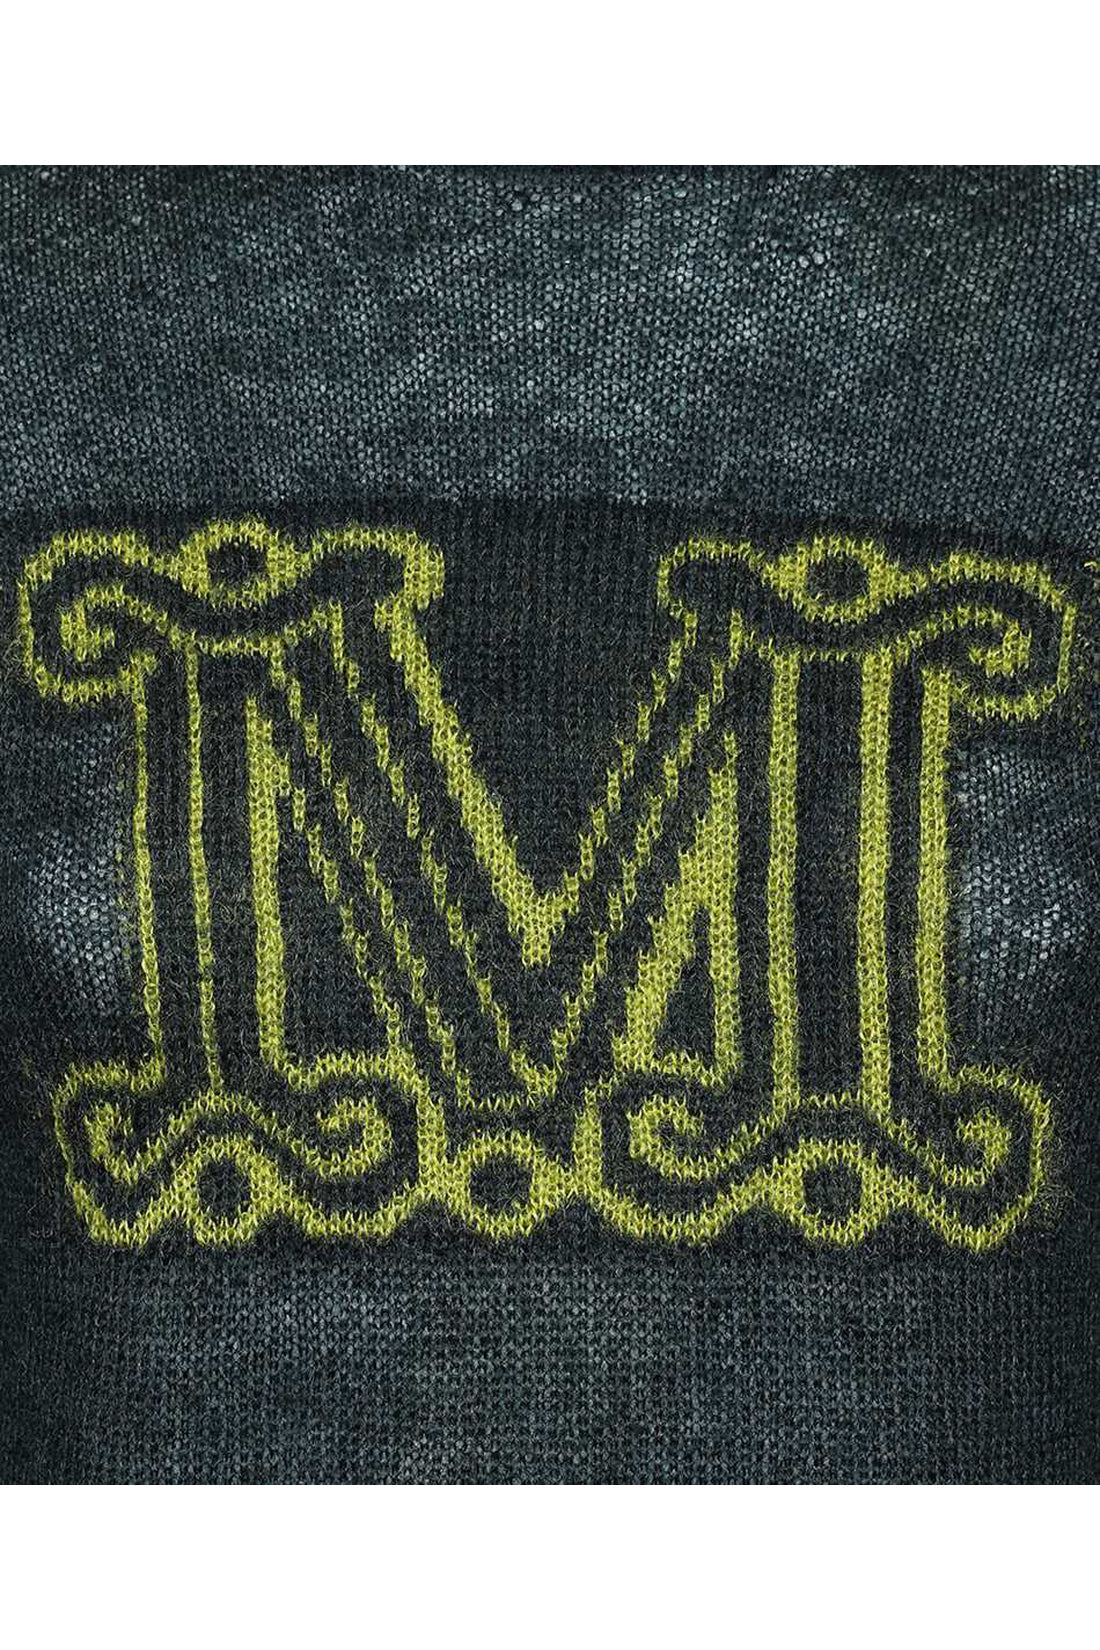 Max Mara-OUTLET-SALE-Chantal mohair blend sweater-ARCHIVIST